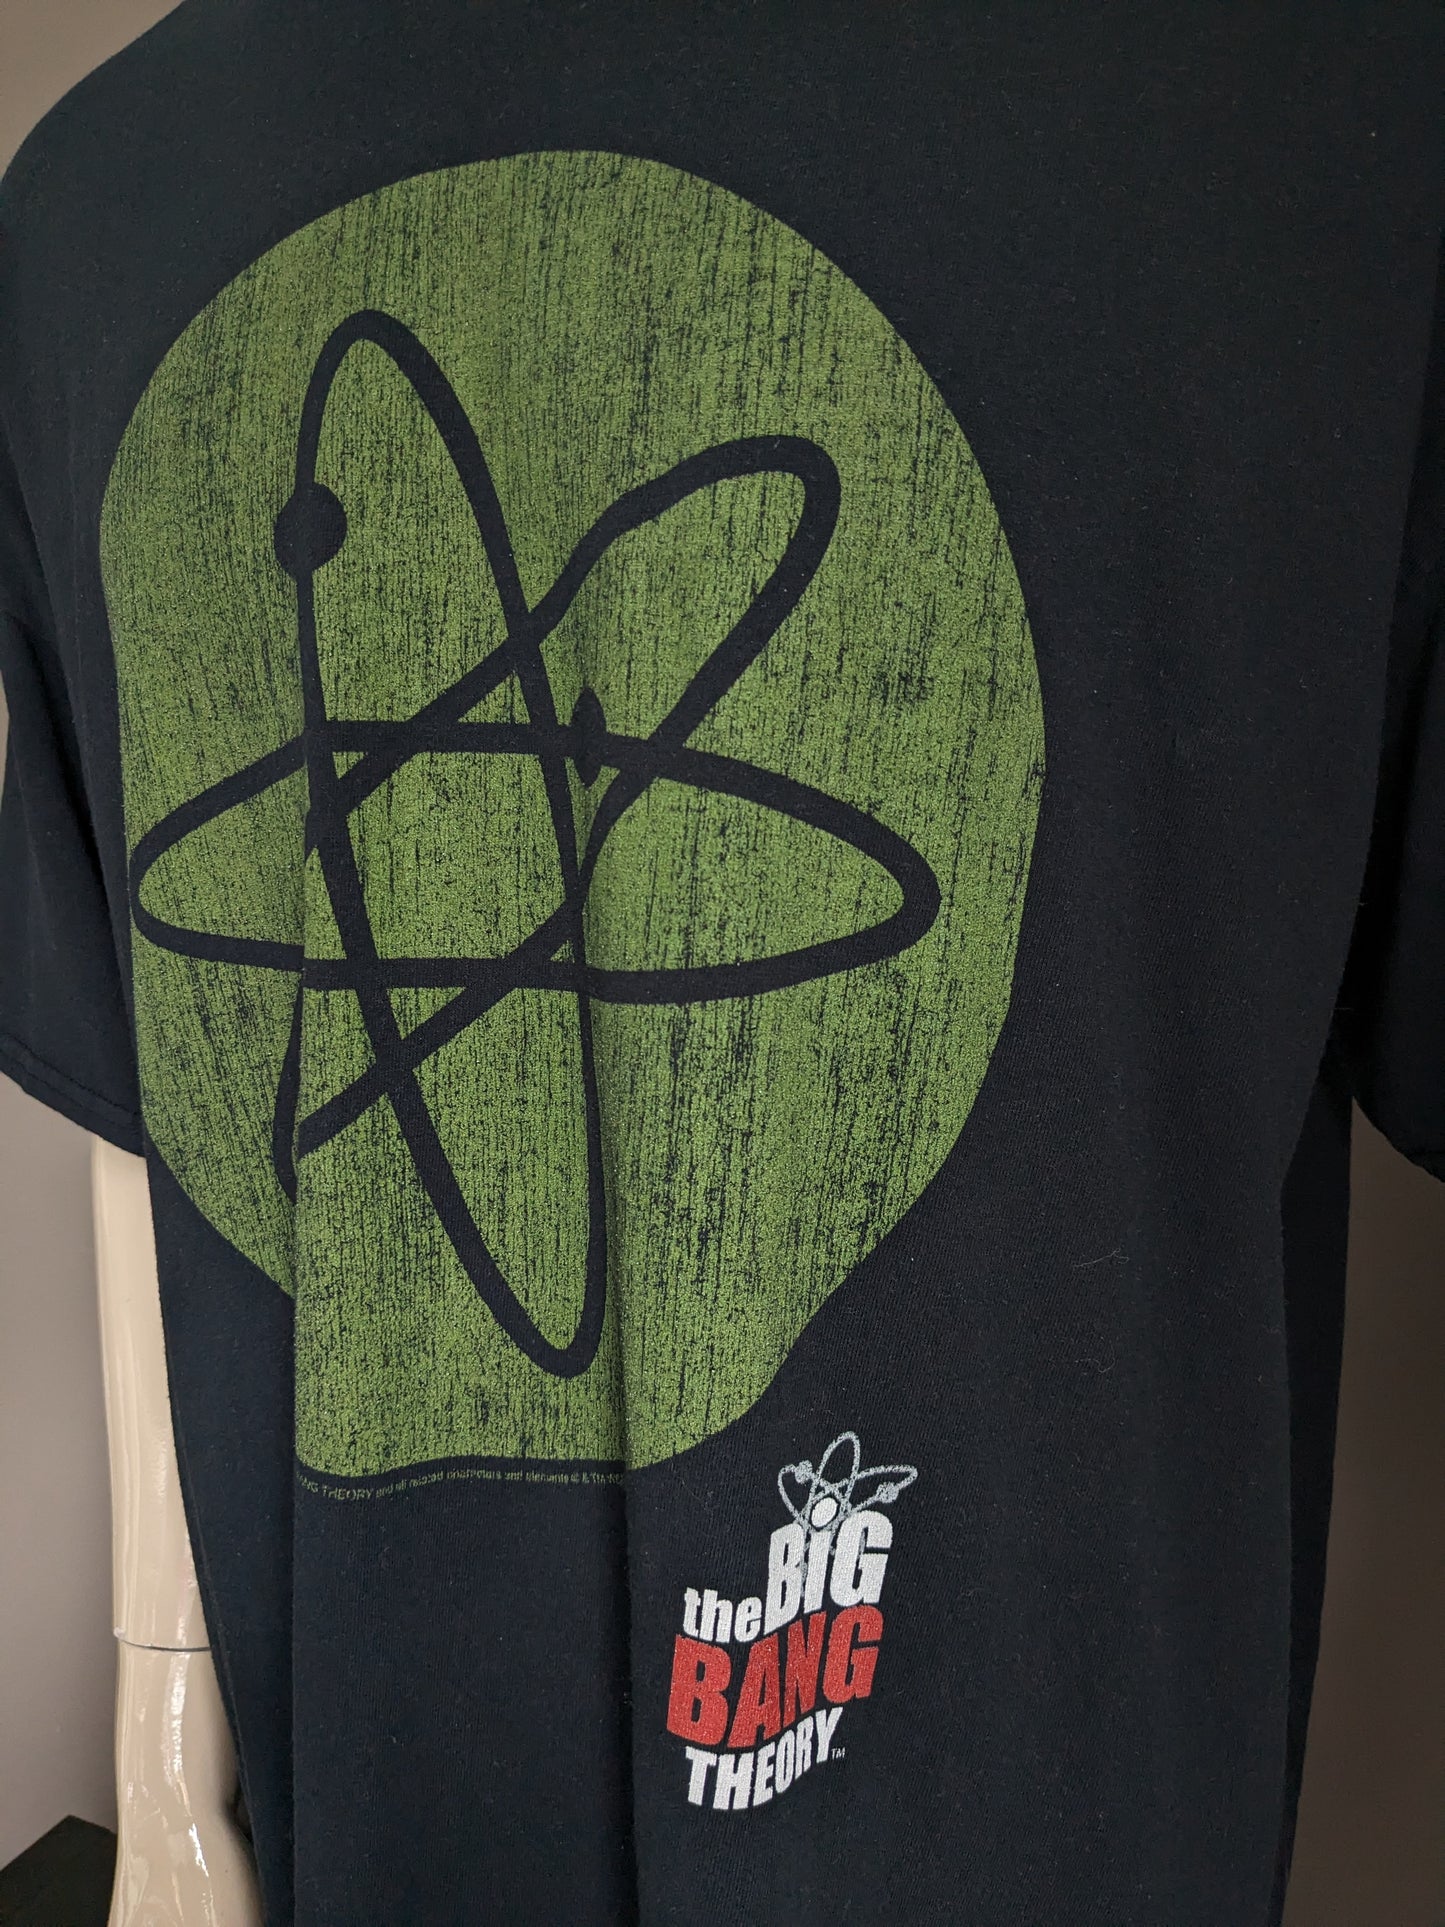 Absolute cult "The Big Bang Theory" shirt. Black with print. Size 3XL / XXXL.